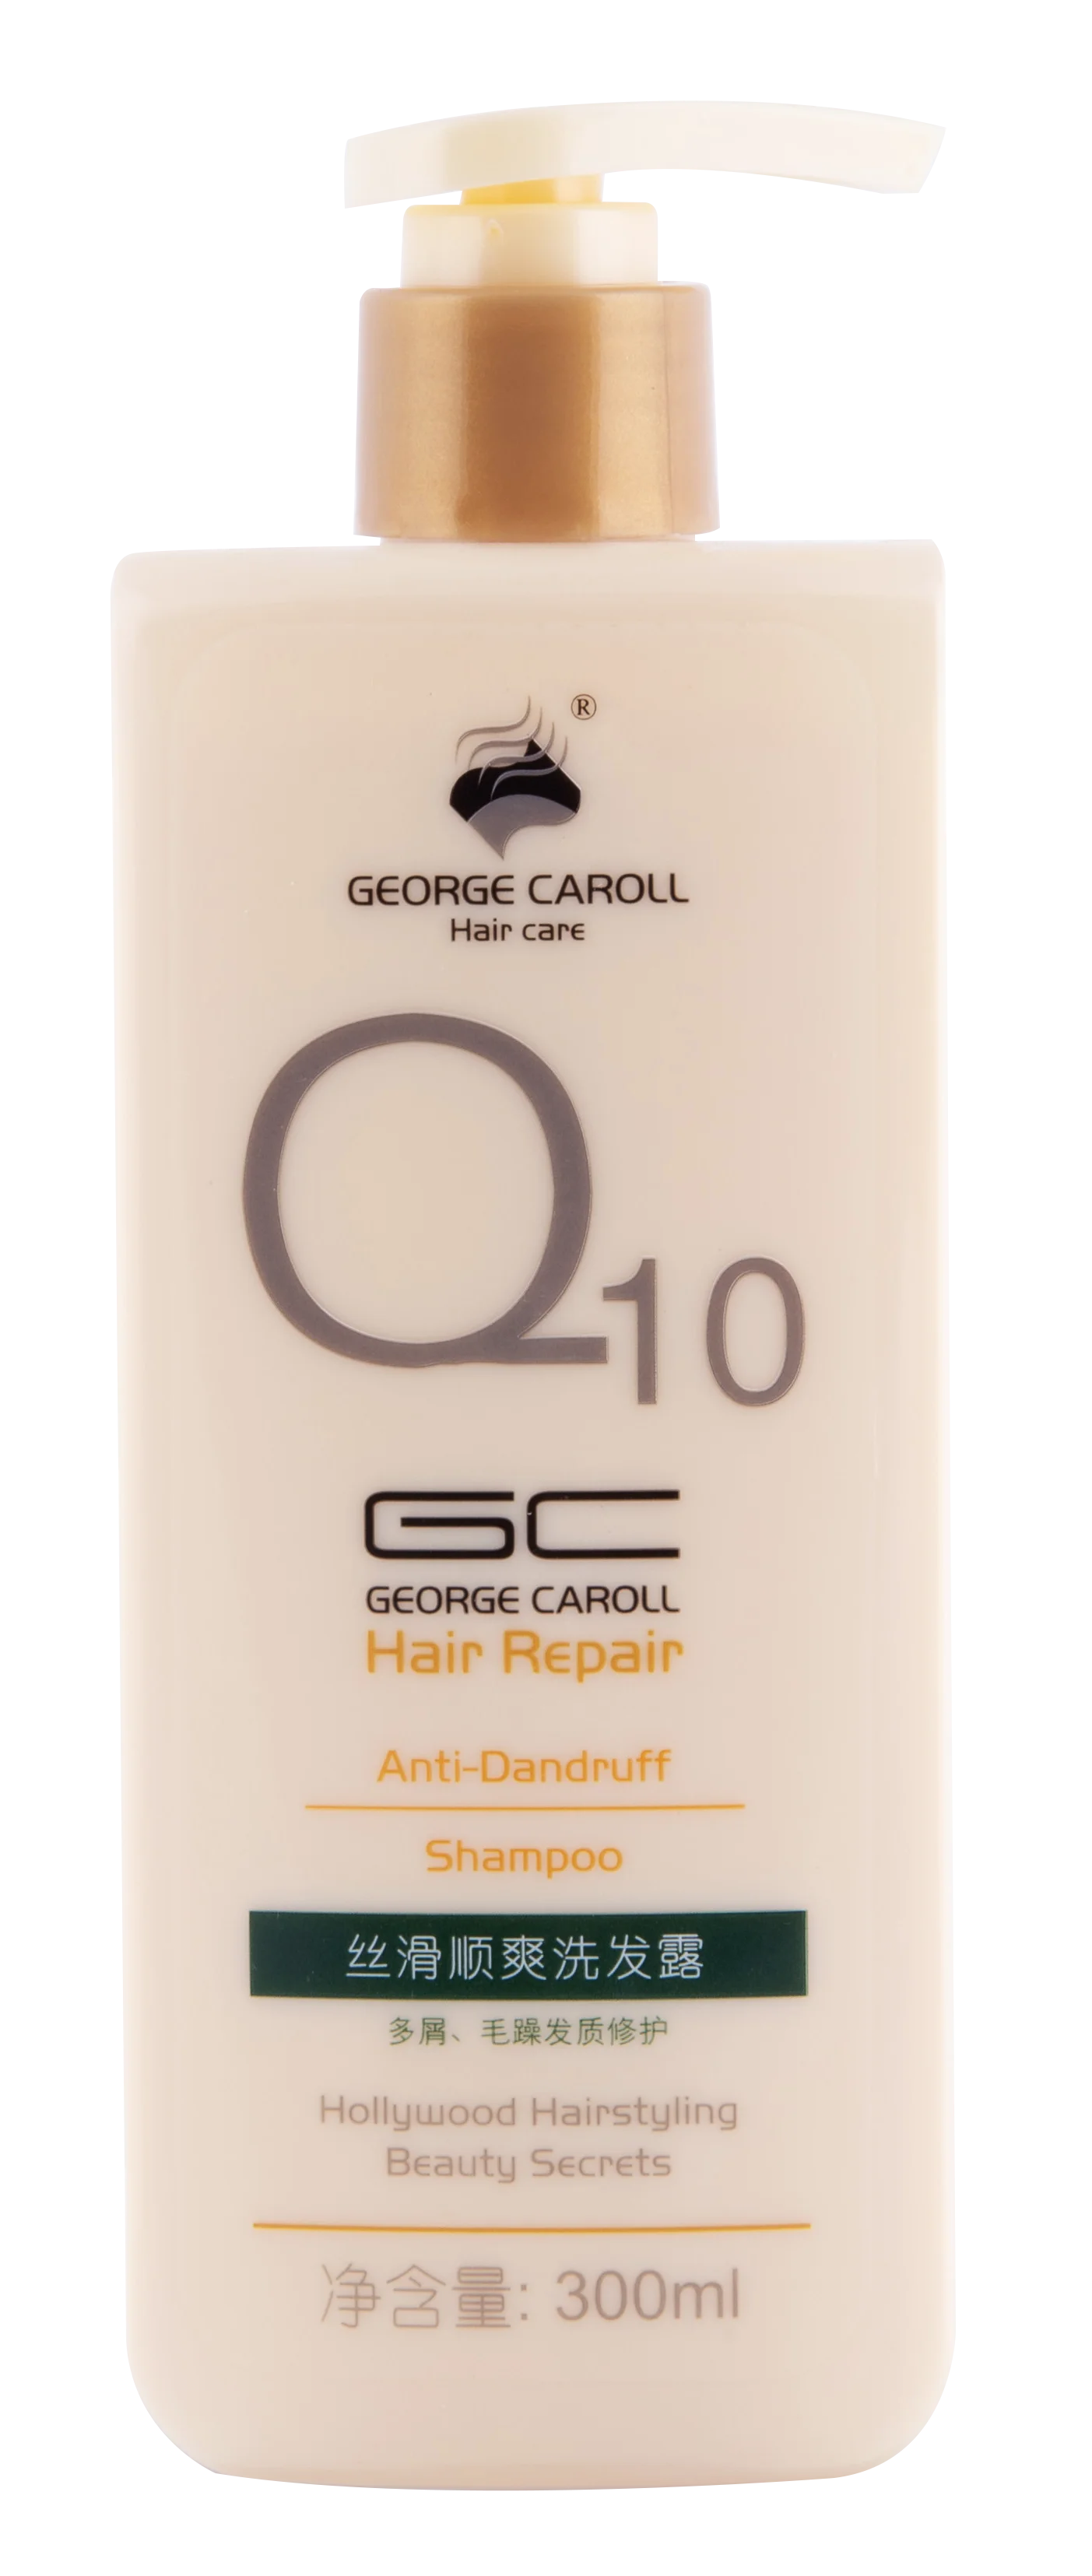 Hd227364630bb479d908895701041b511W Anti-Dandruff Shampoo，A Shampoo That Is Balanced To The Ph of Skin,Shampoo Oily Hair,Shampoo Good For Dandruff,300ml